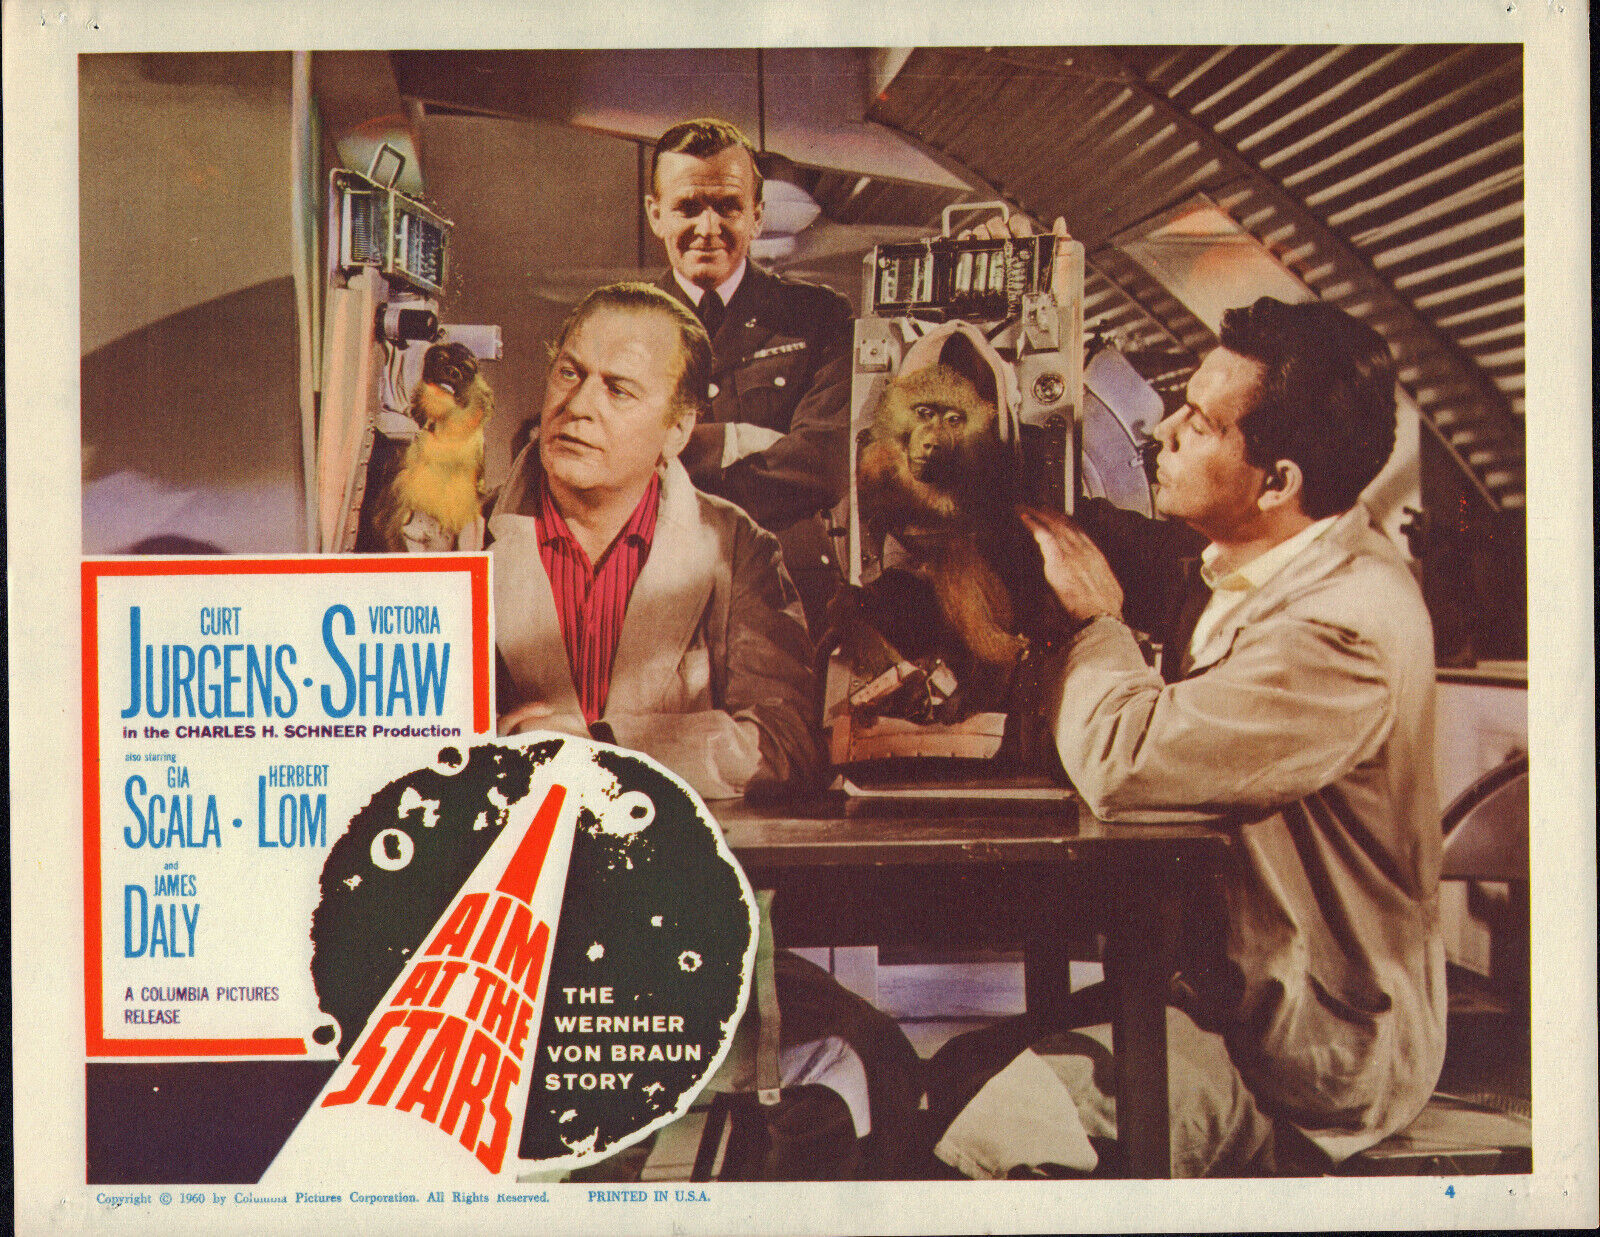 I AIM AT THE STARS orig 1960 lobby card poster CURT JURGENS/WERNHER VON BRAUN